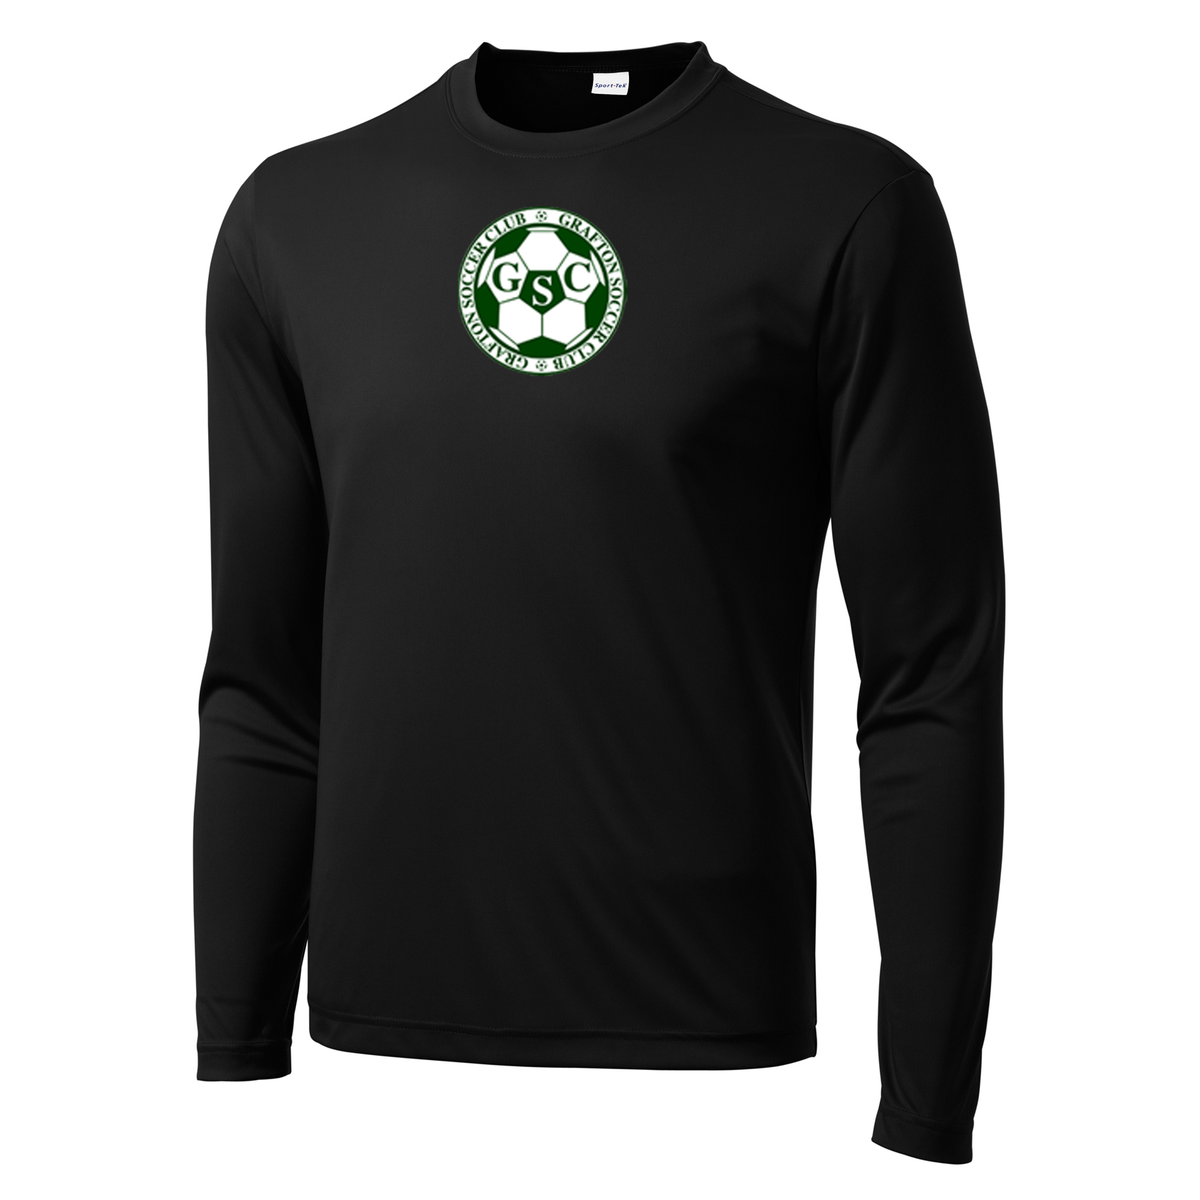 Grafton Youth Soccer Club Long Sleeve Performance Shirt